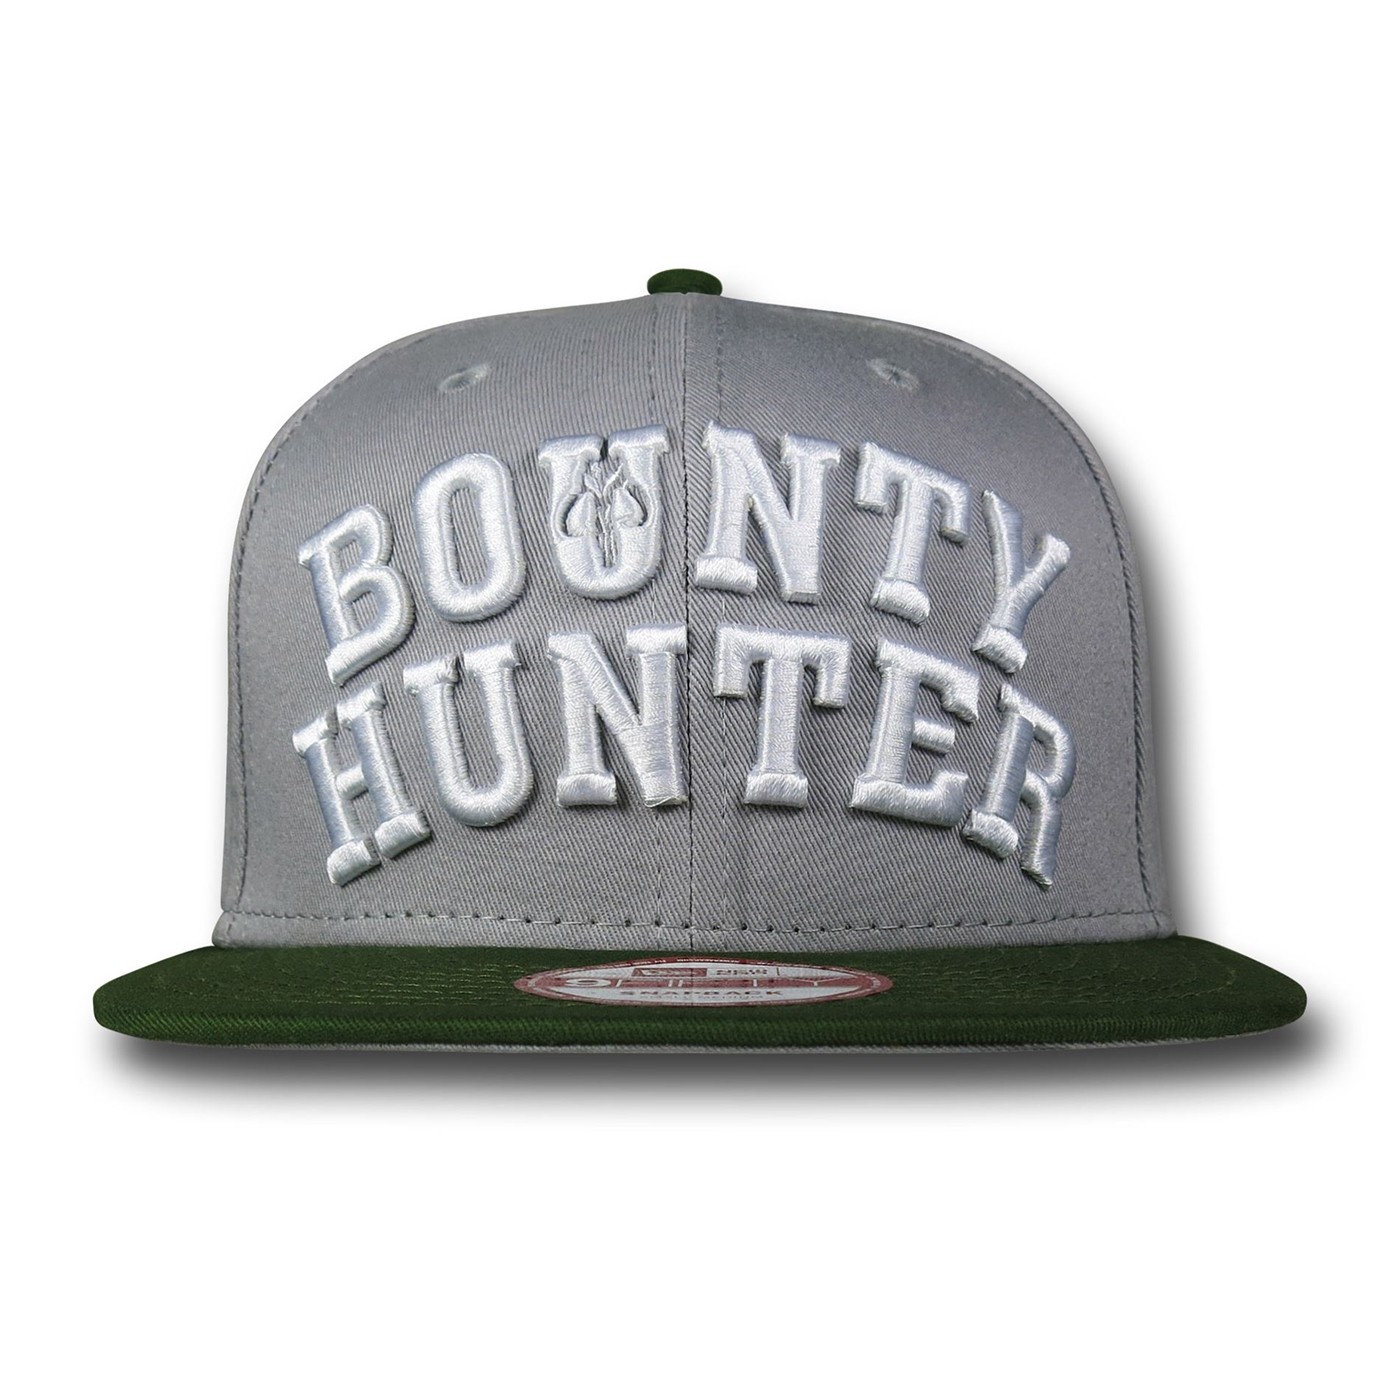 Star Wars Bounty Hunter Logo 9Fifty Cap